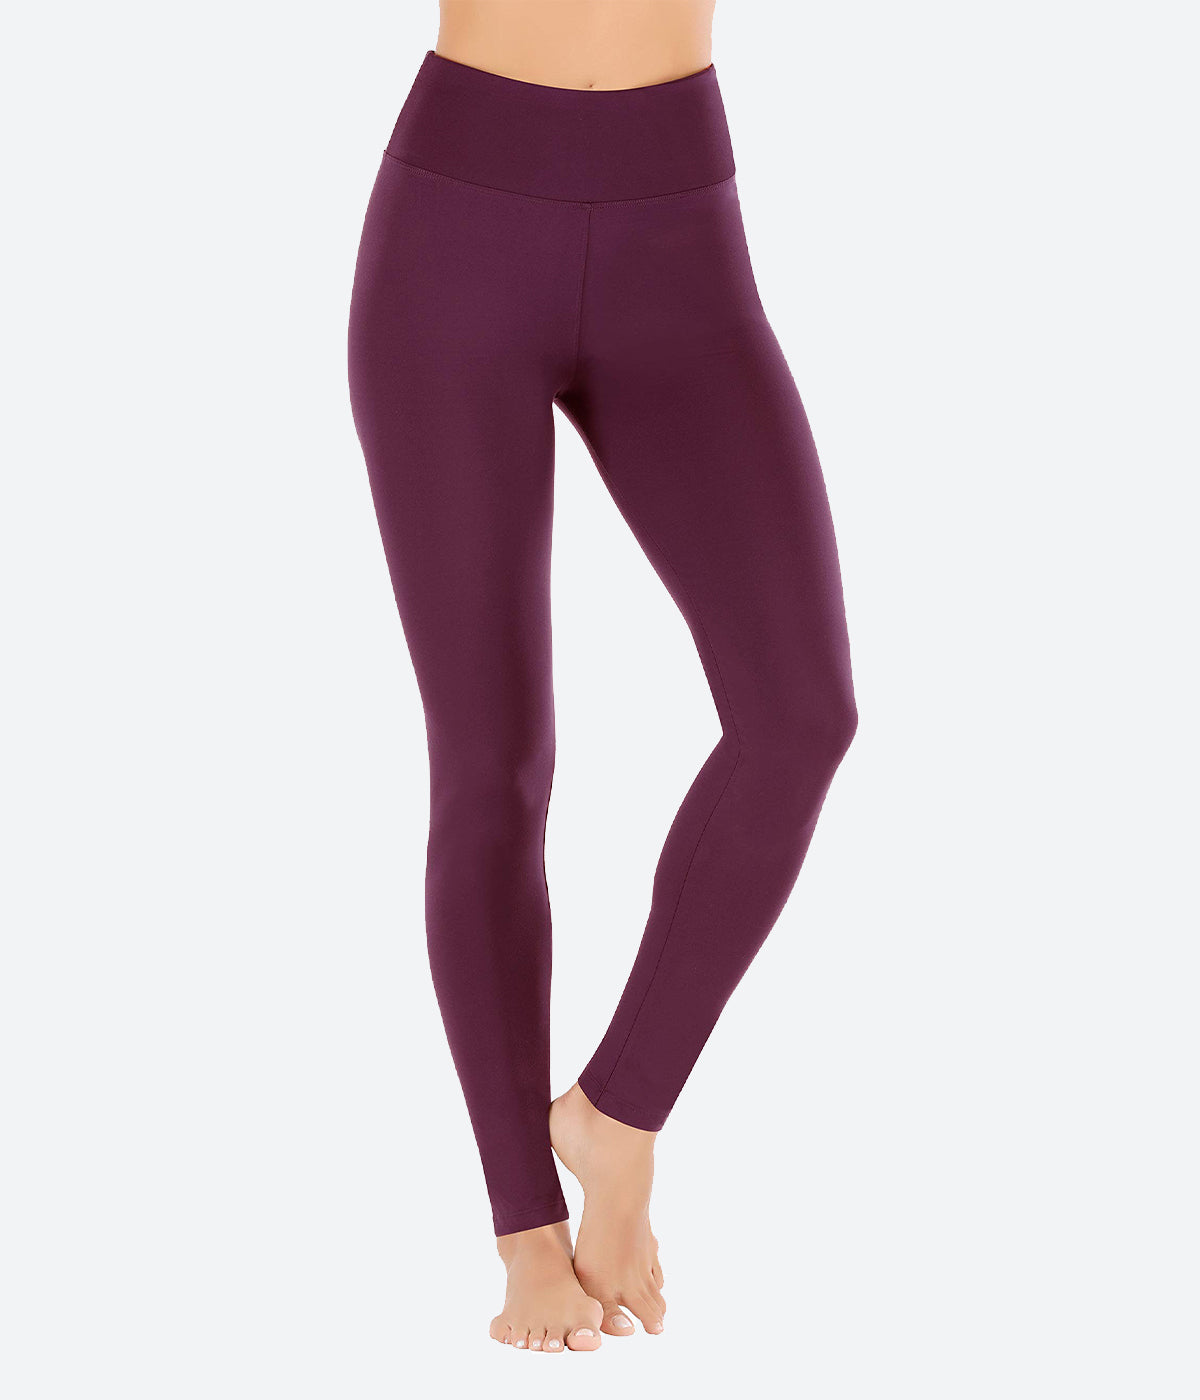 Yao Yoga Pants for Women High Waist with Pockets Flex Leggings